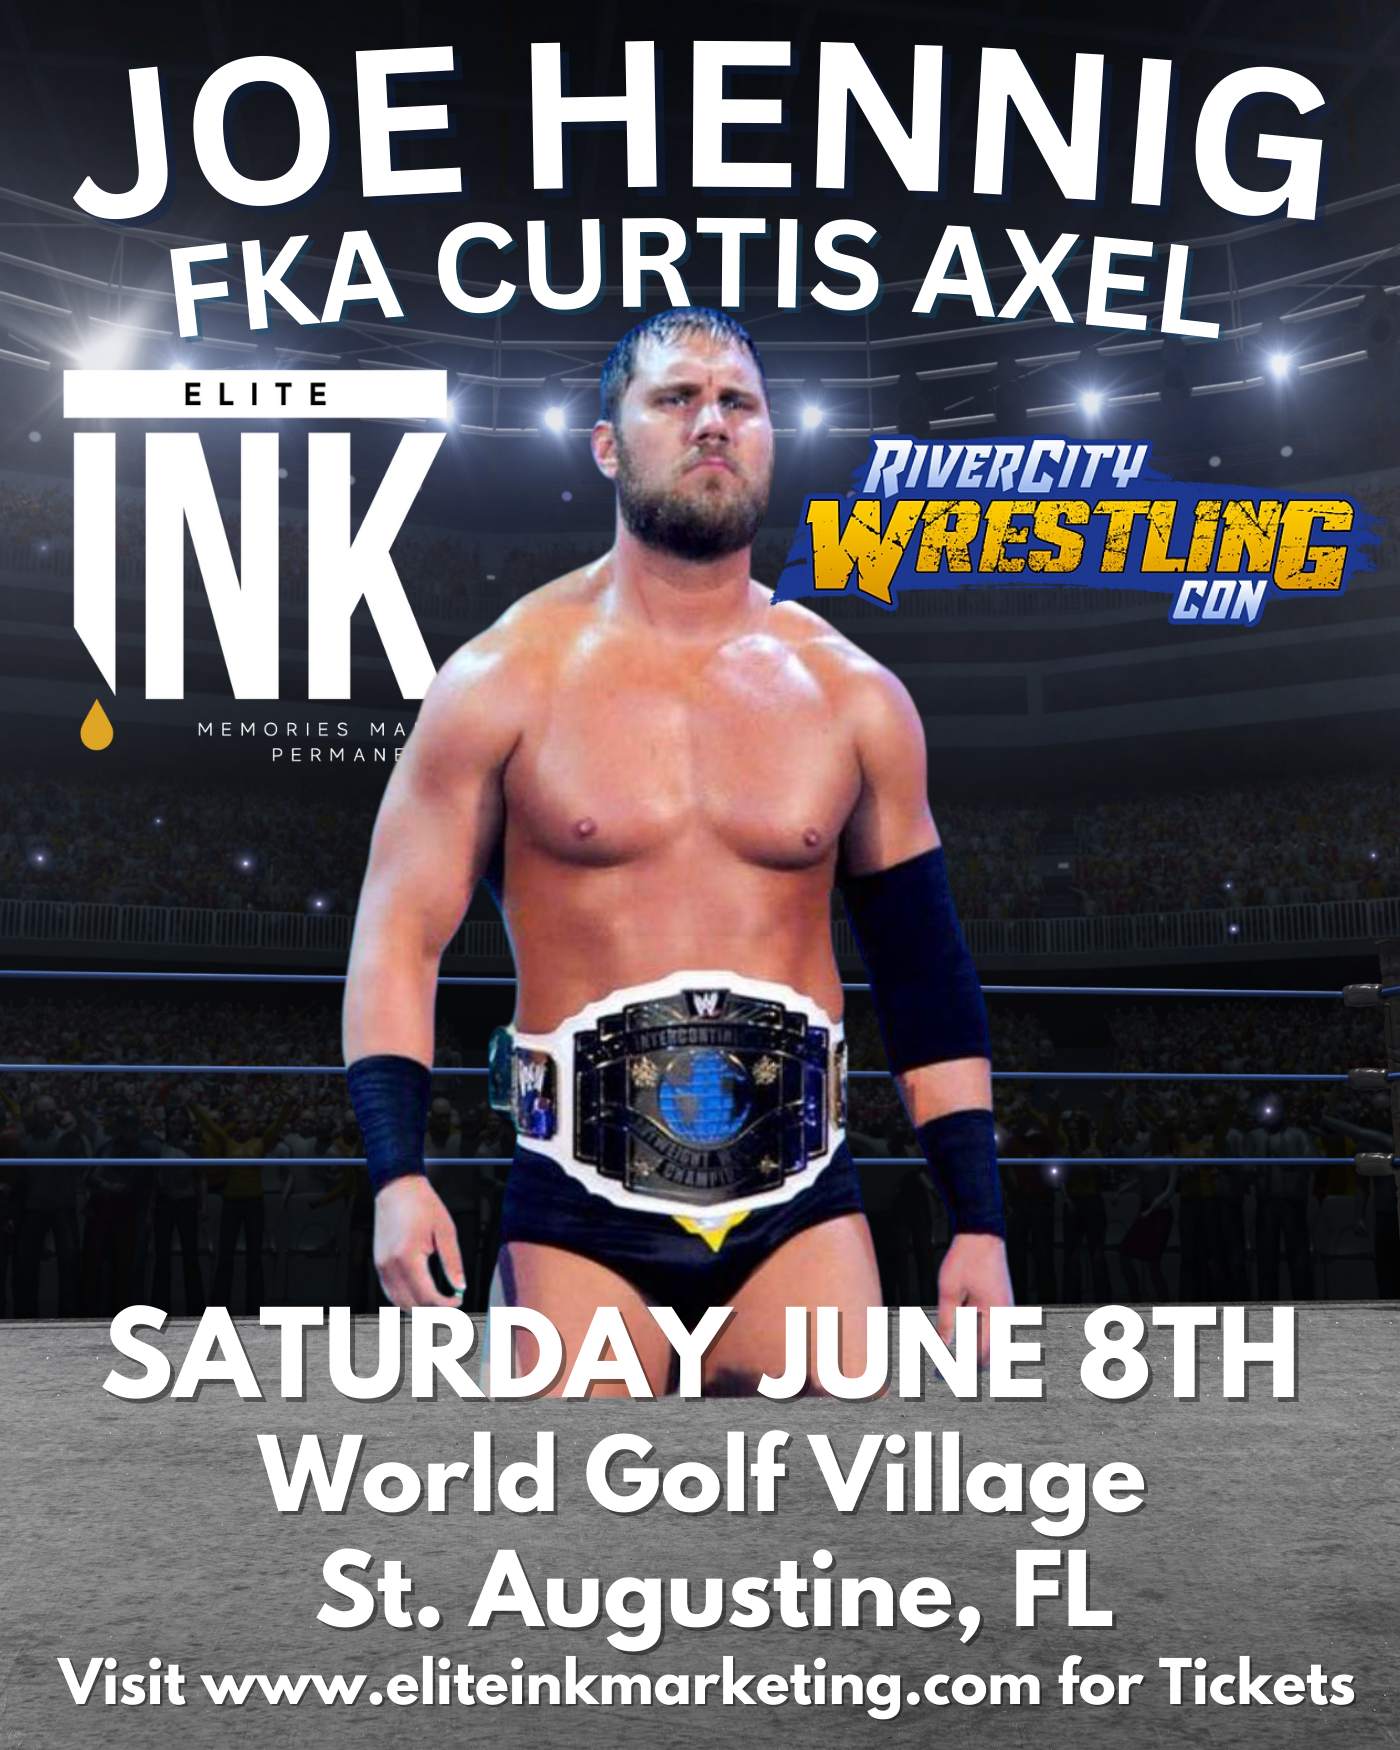 Joe Hennig FKA Curtis Axel River City Wrestling Con Saturday June 8th Pre-Order